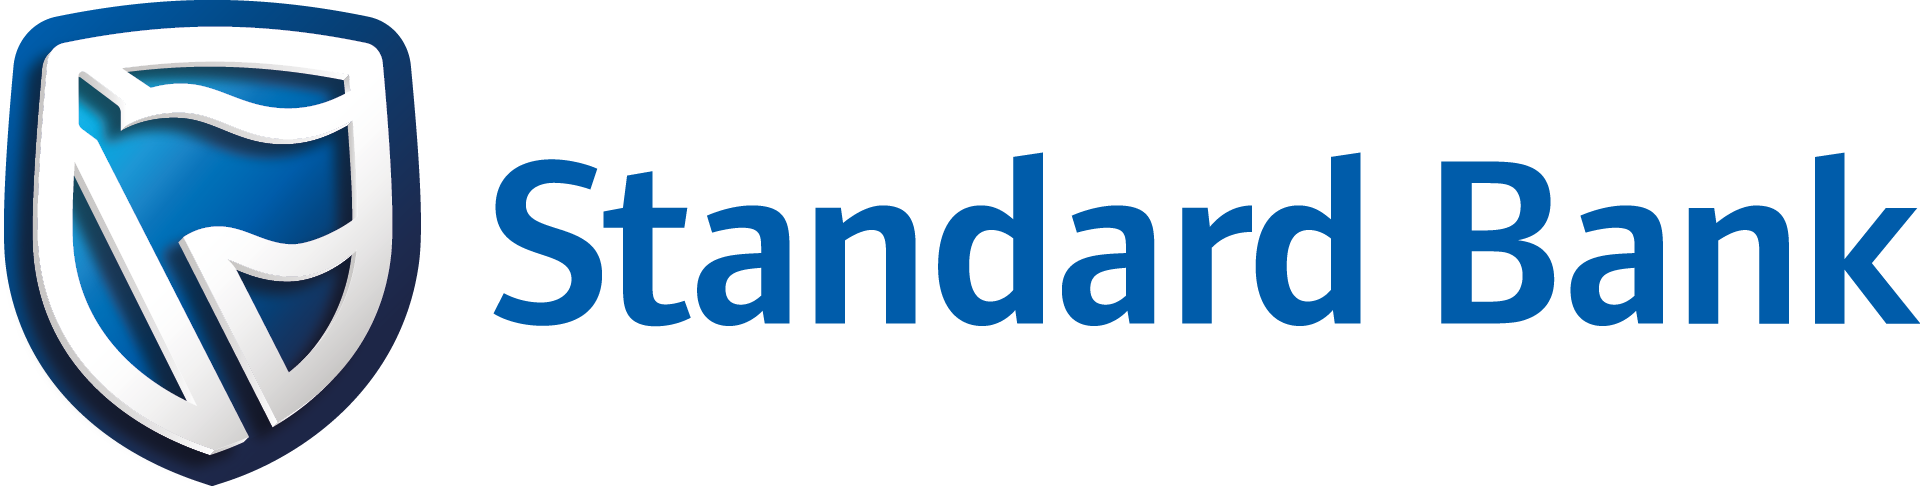 Entersekt customer - Standard Bank logo